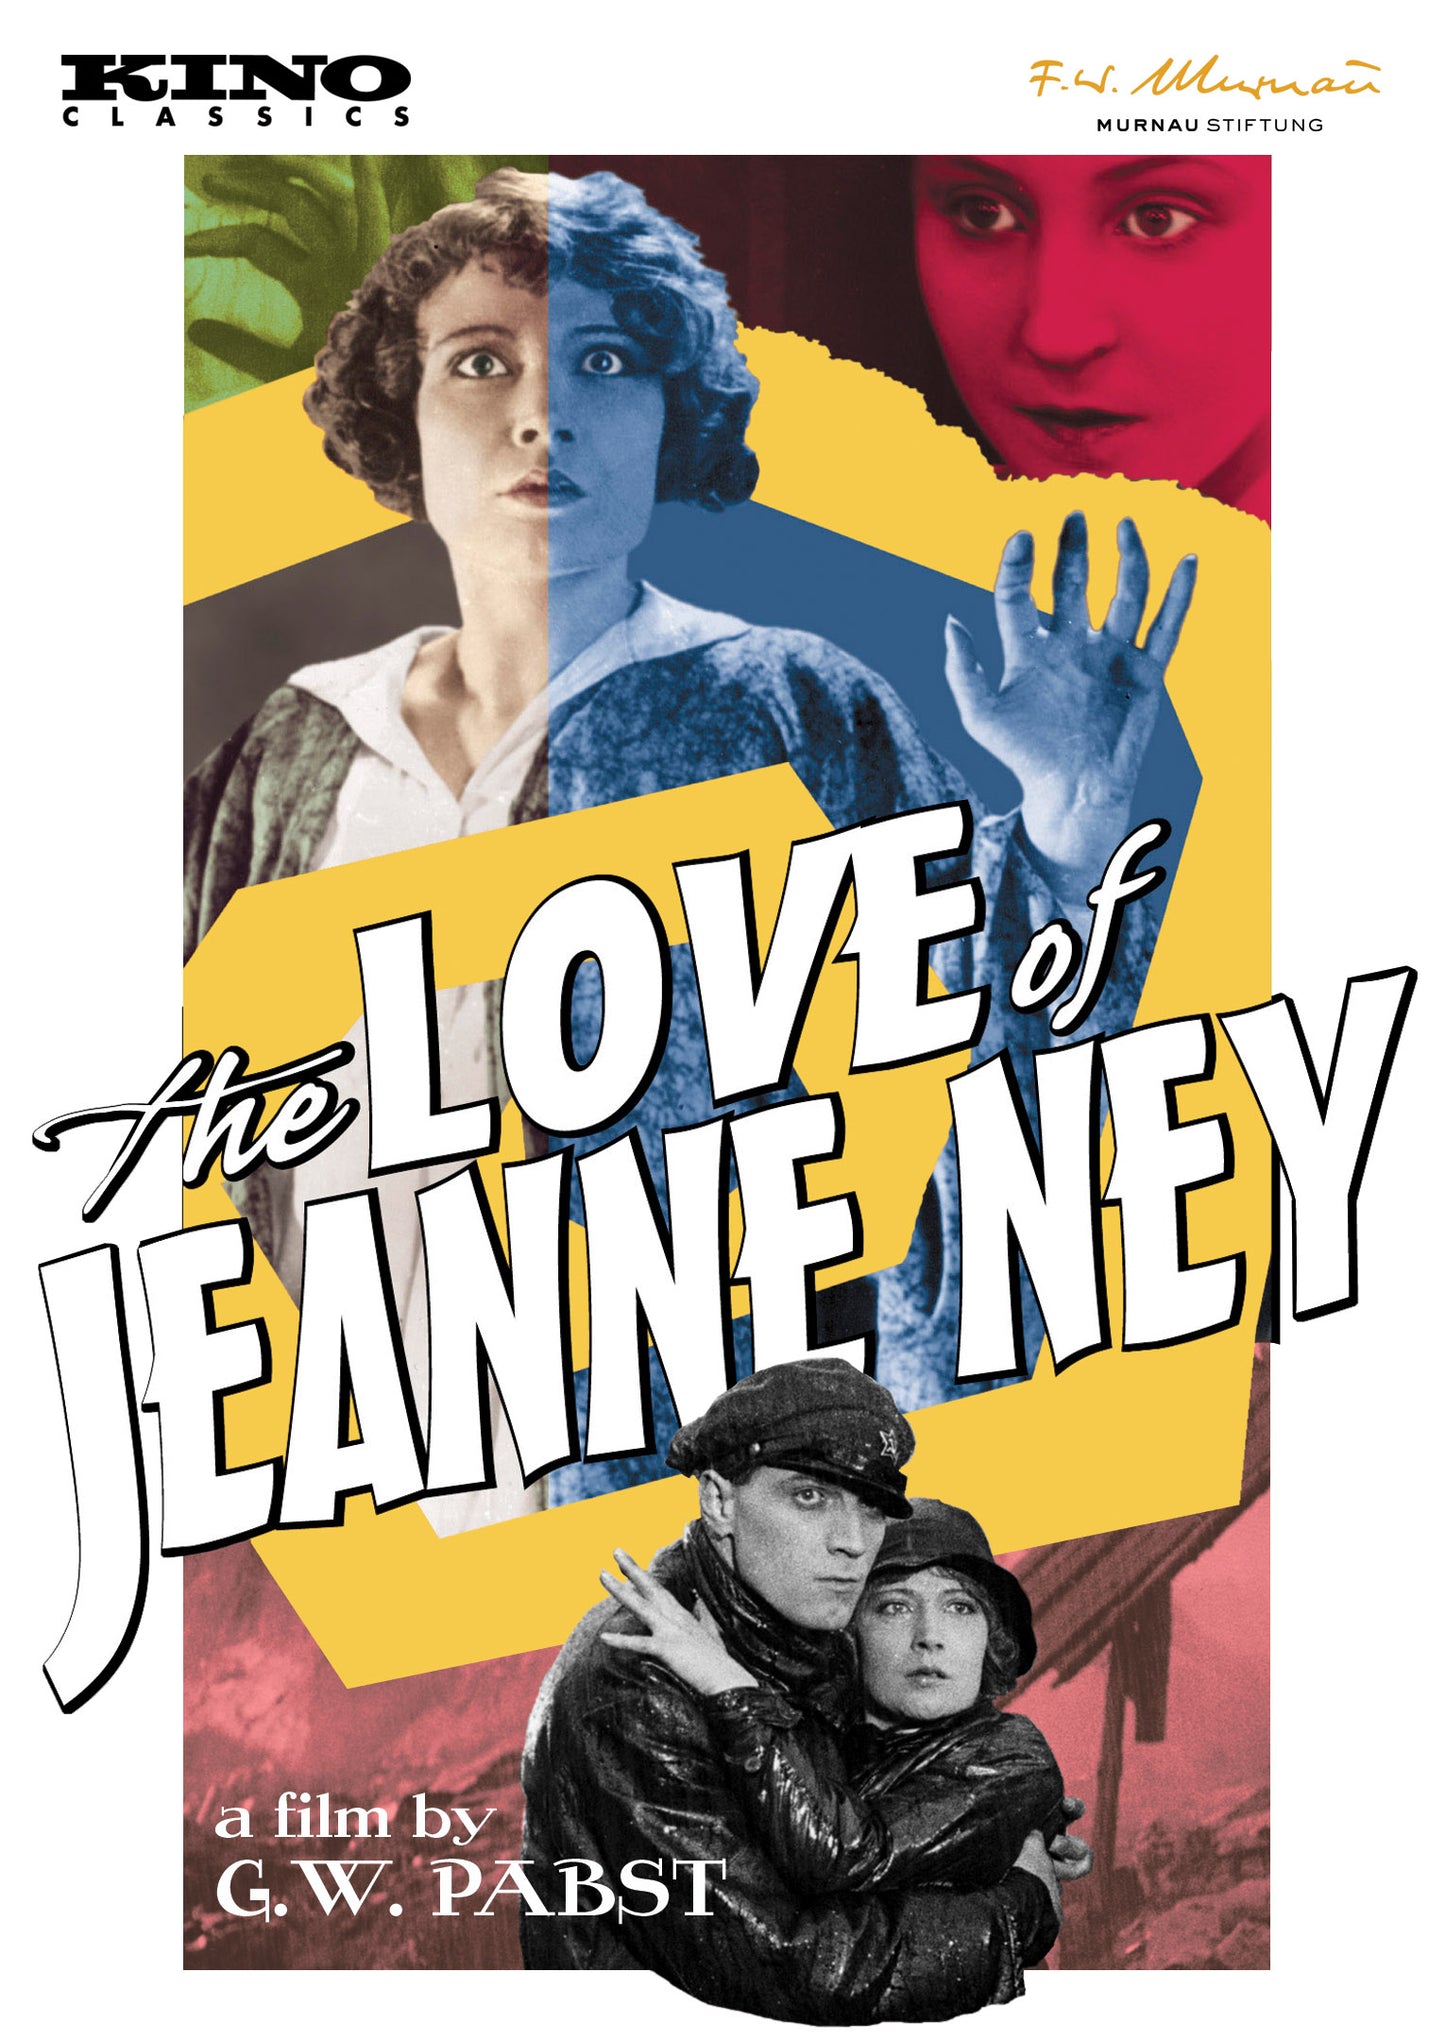 Love of Jeanne Ney cover art